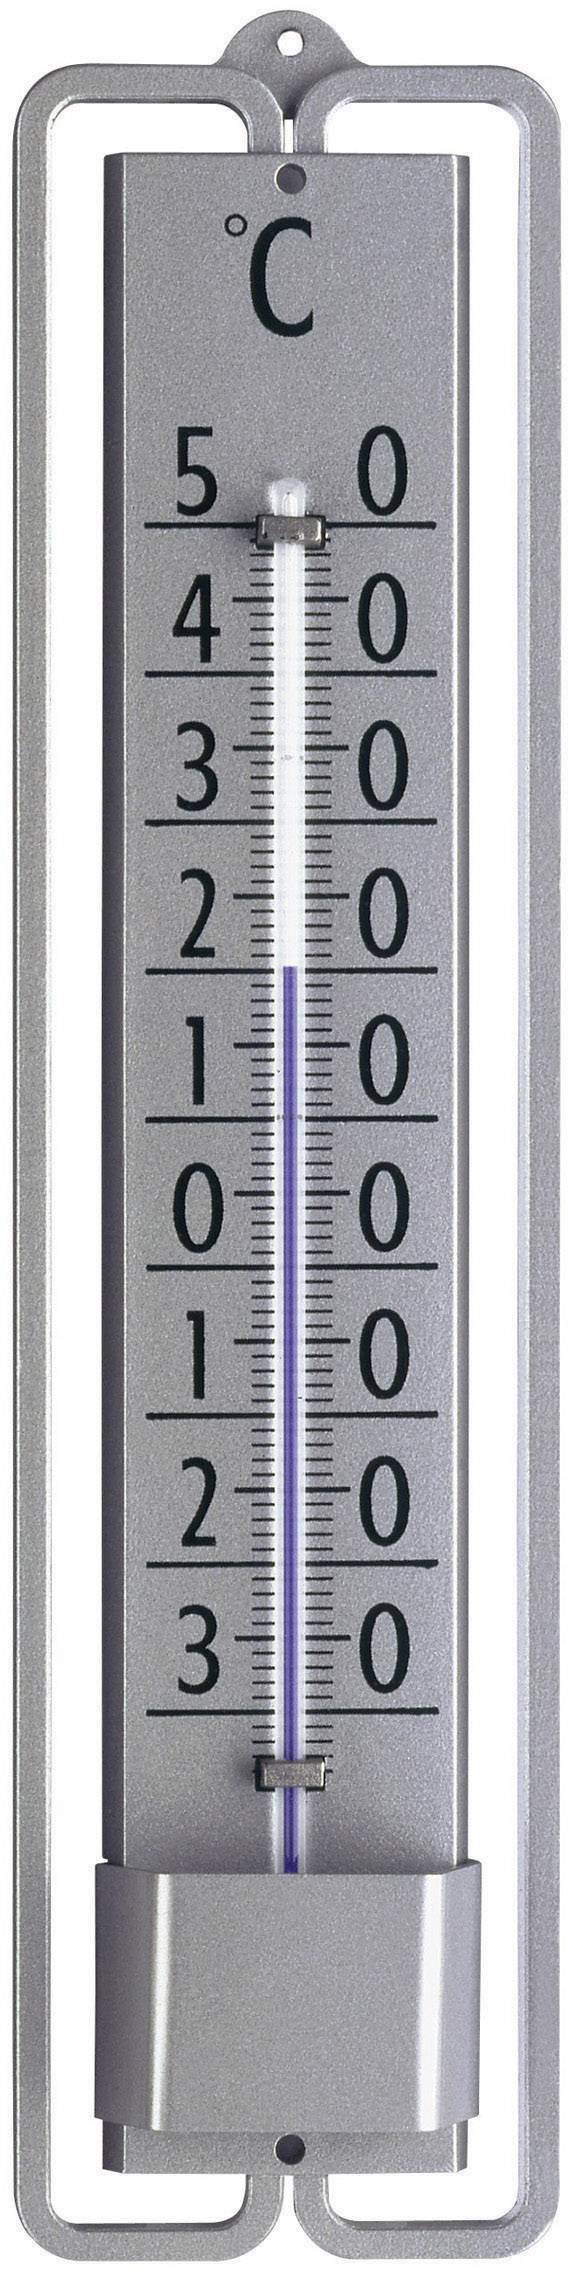 TFA-DOSTMANN Wand Thermometer TFA 12.2001.54 Grau